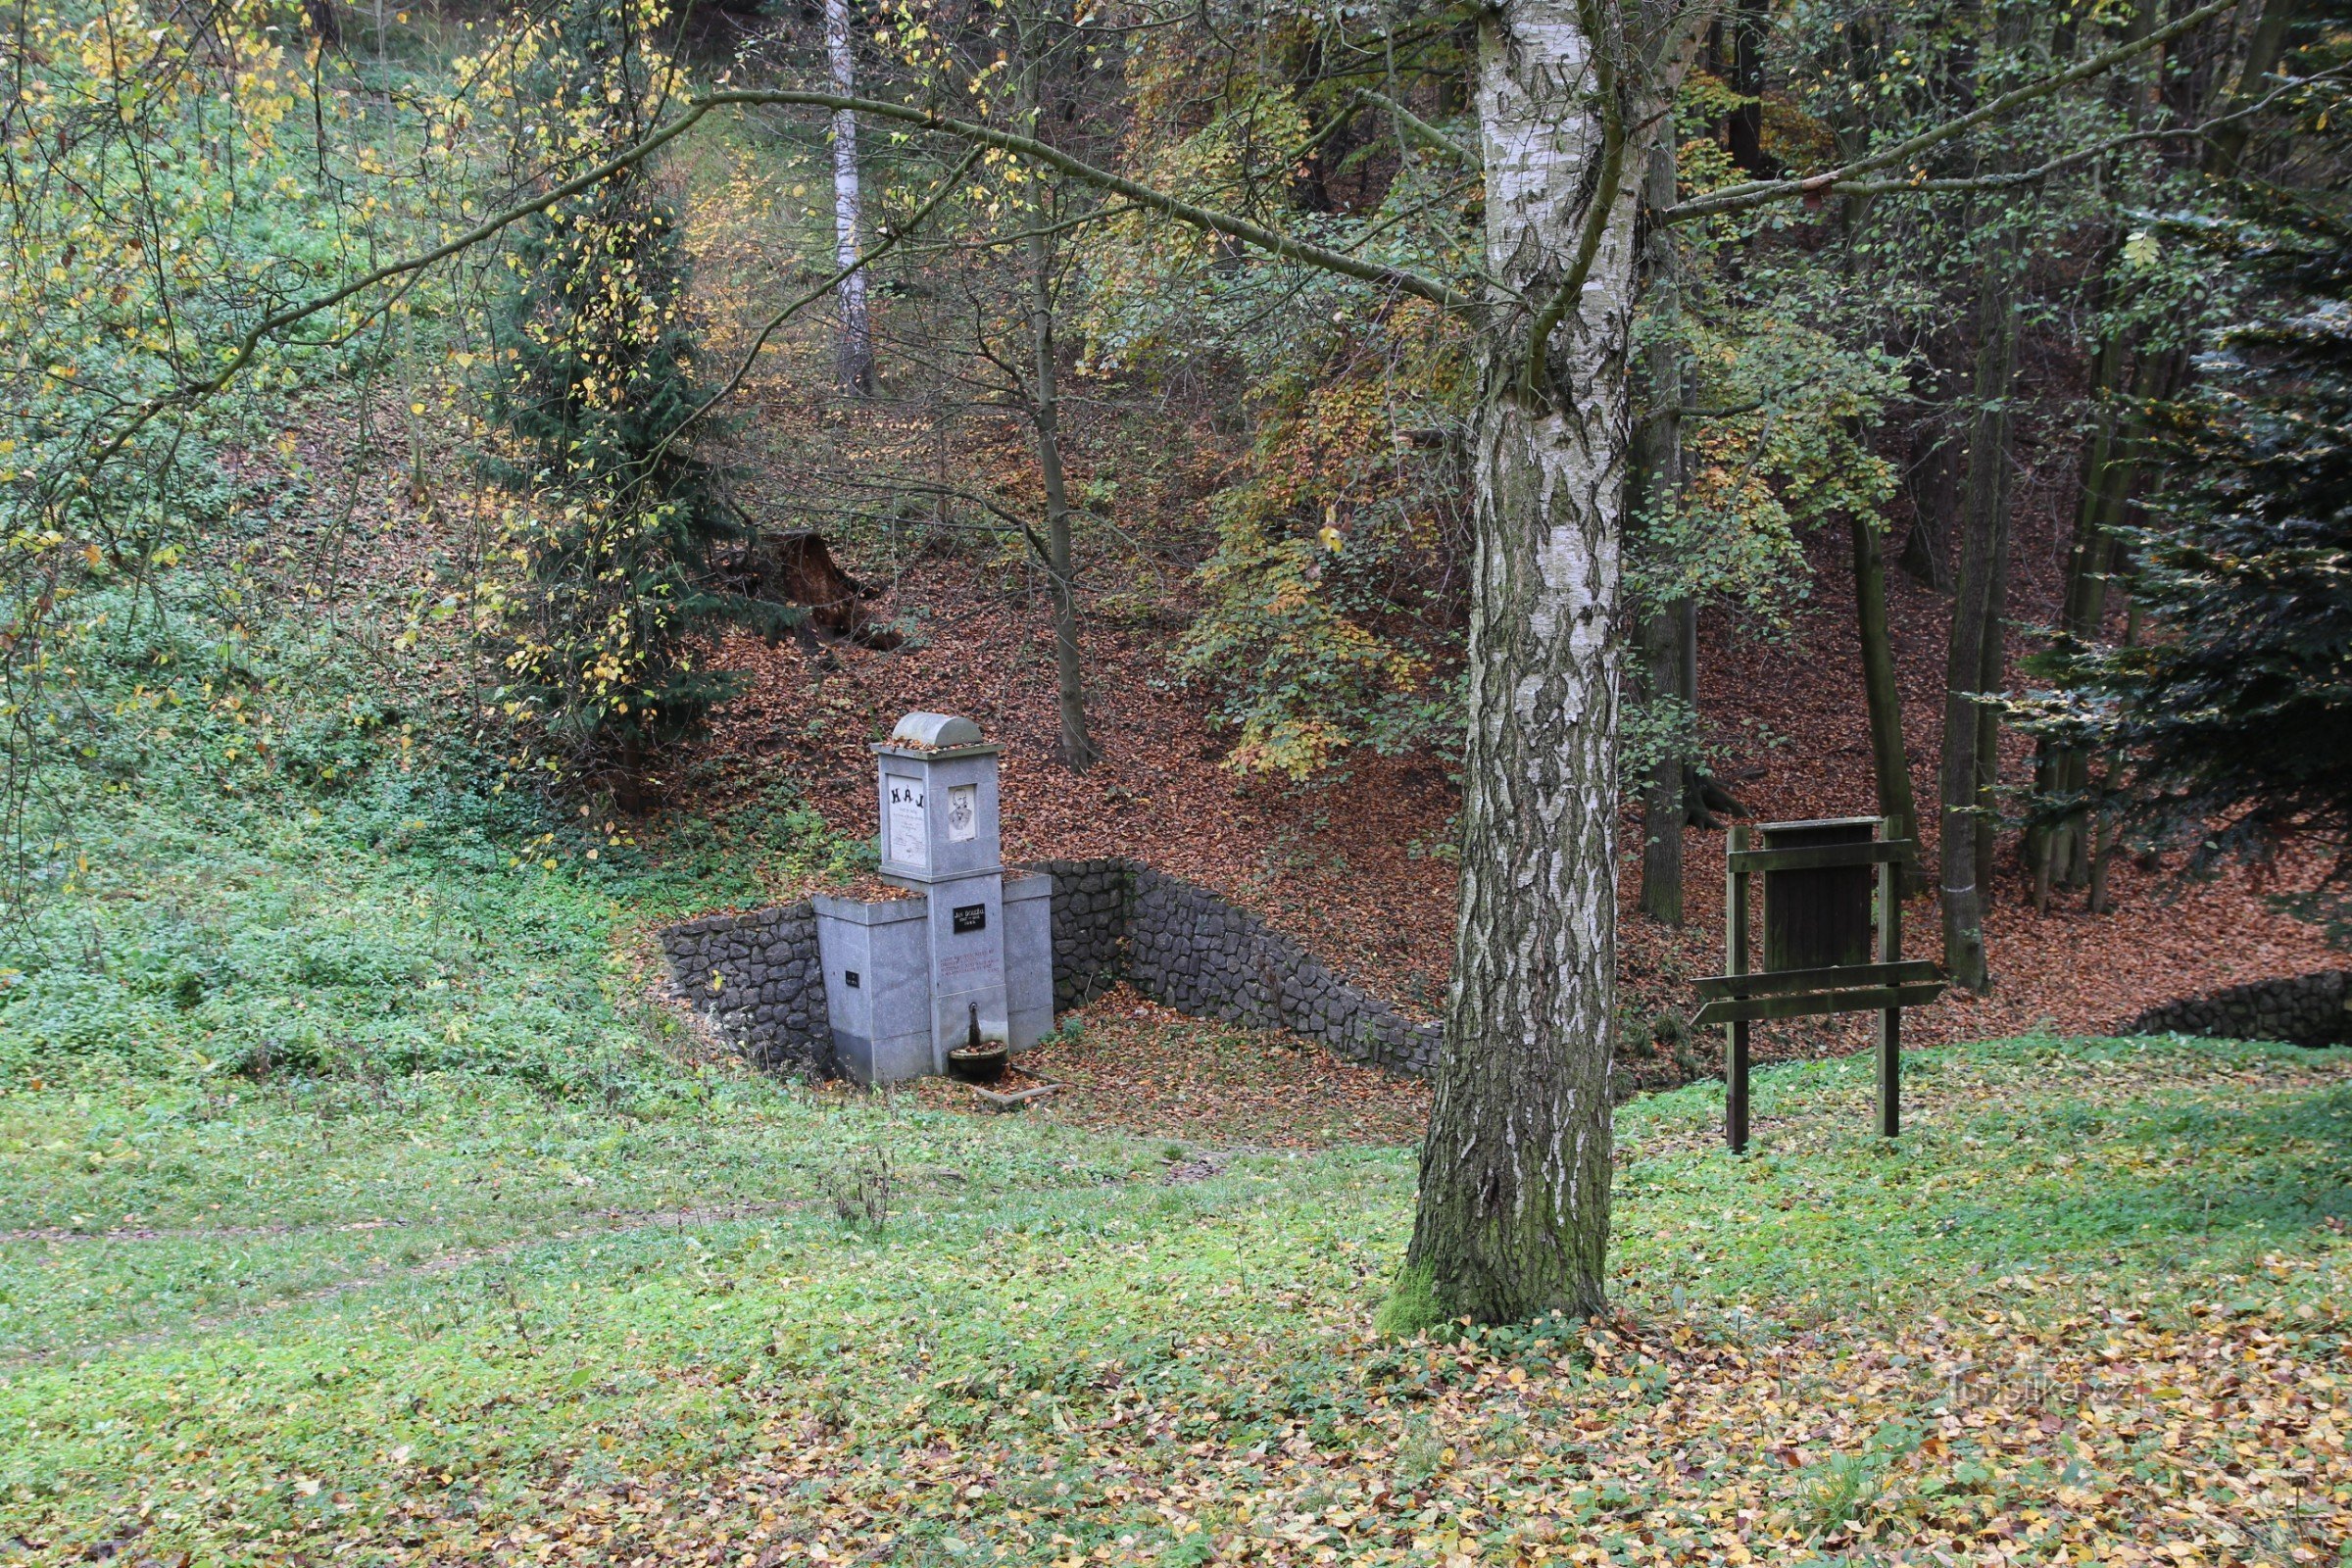 Doležal's well